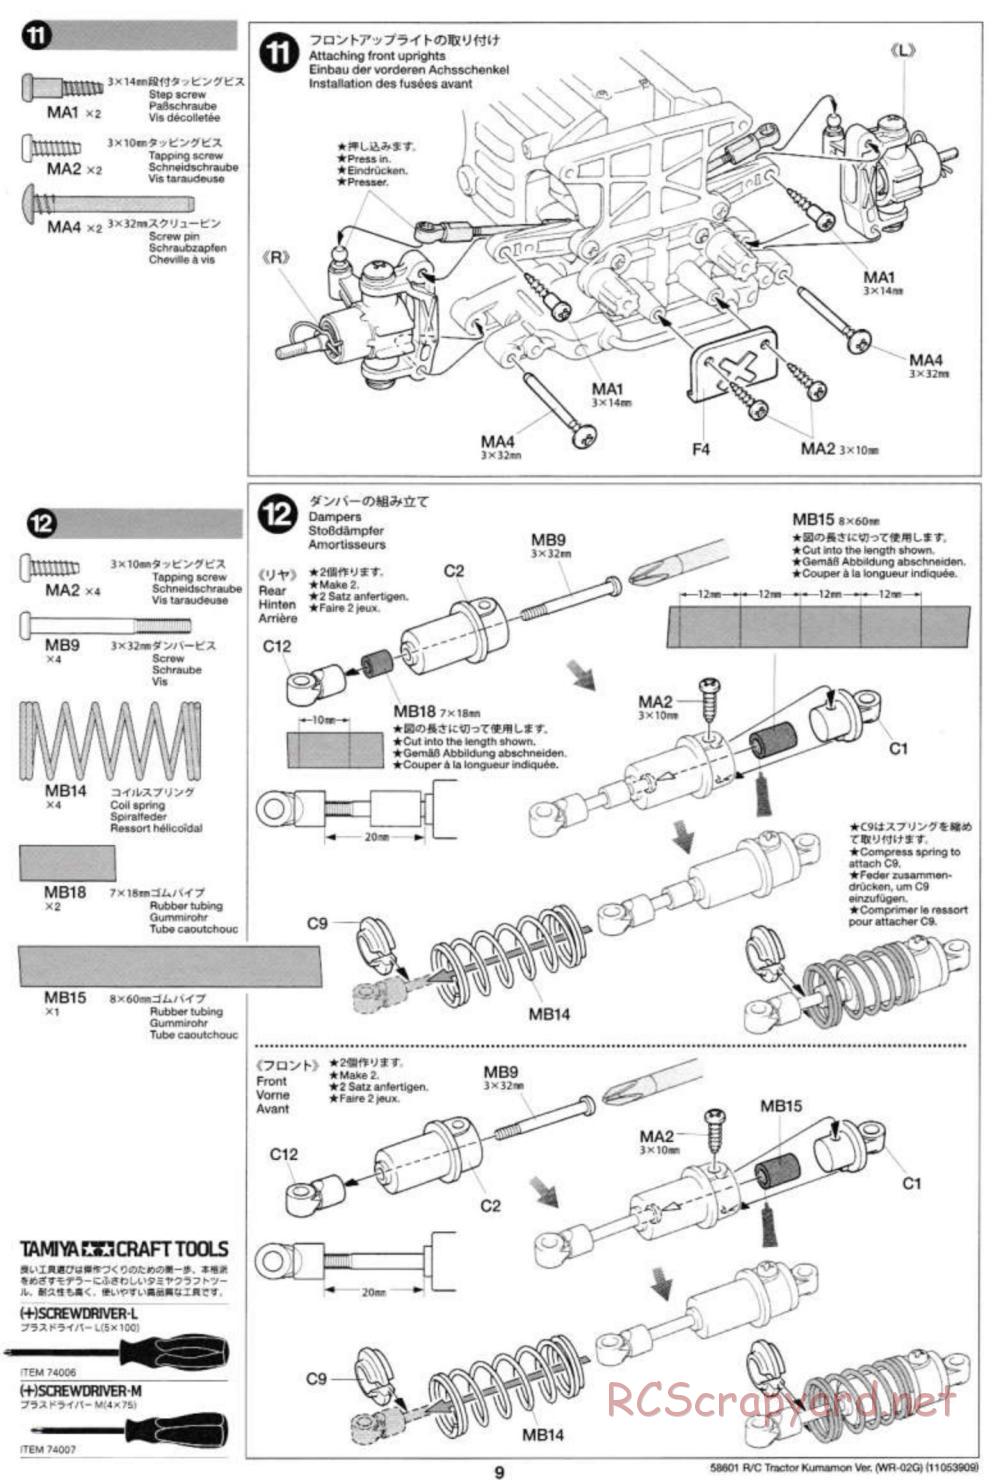 Tamiya - Tractor Kumamon Version Chassis - Manual - Page 9